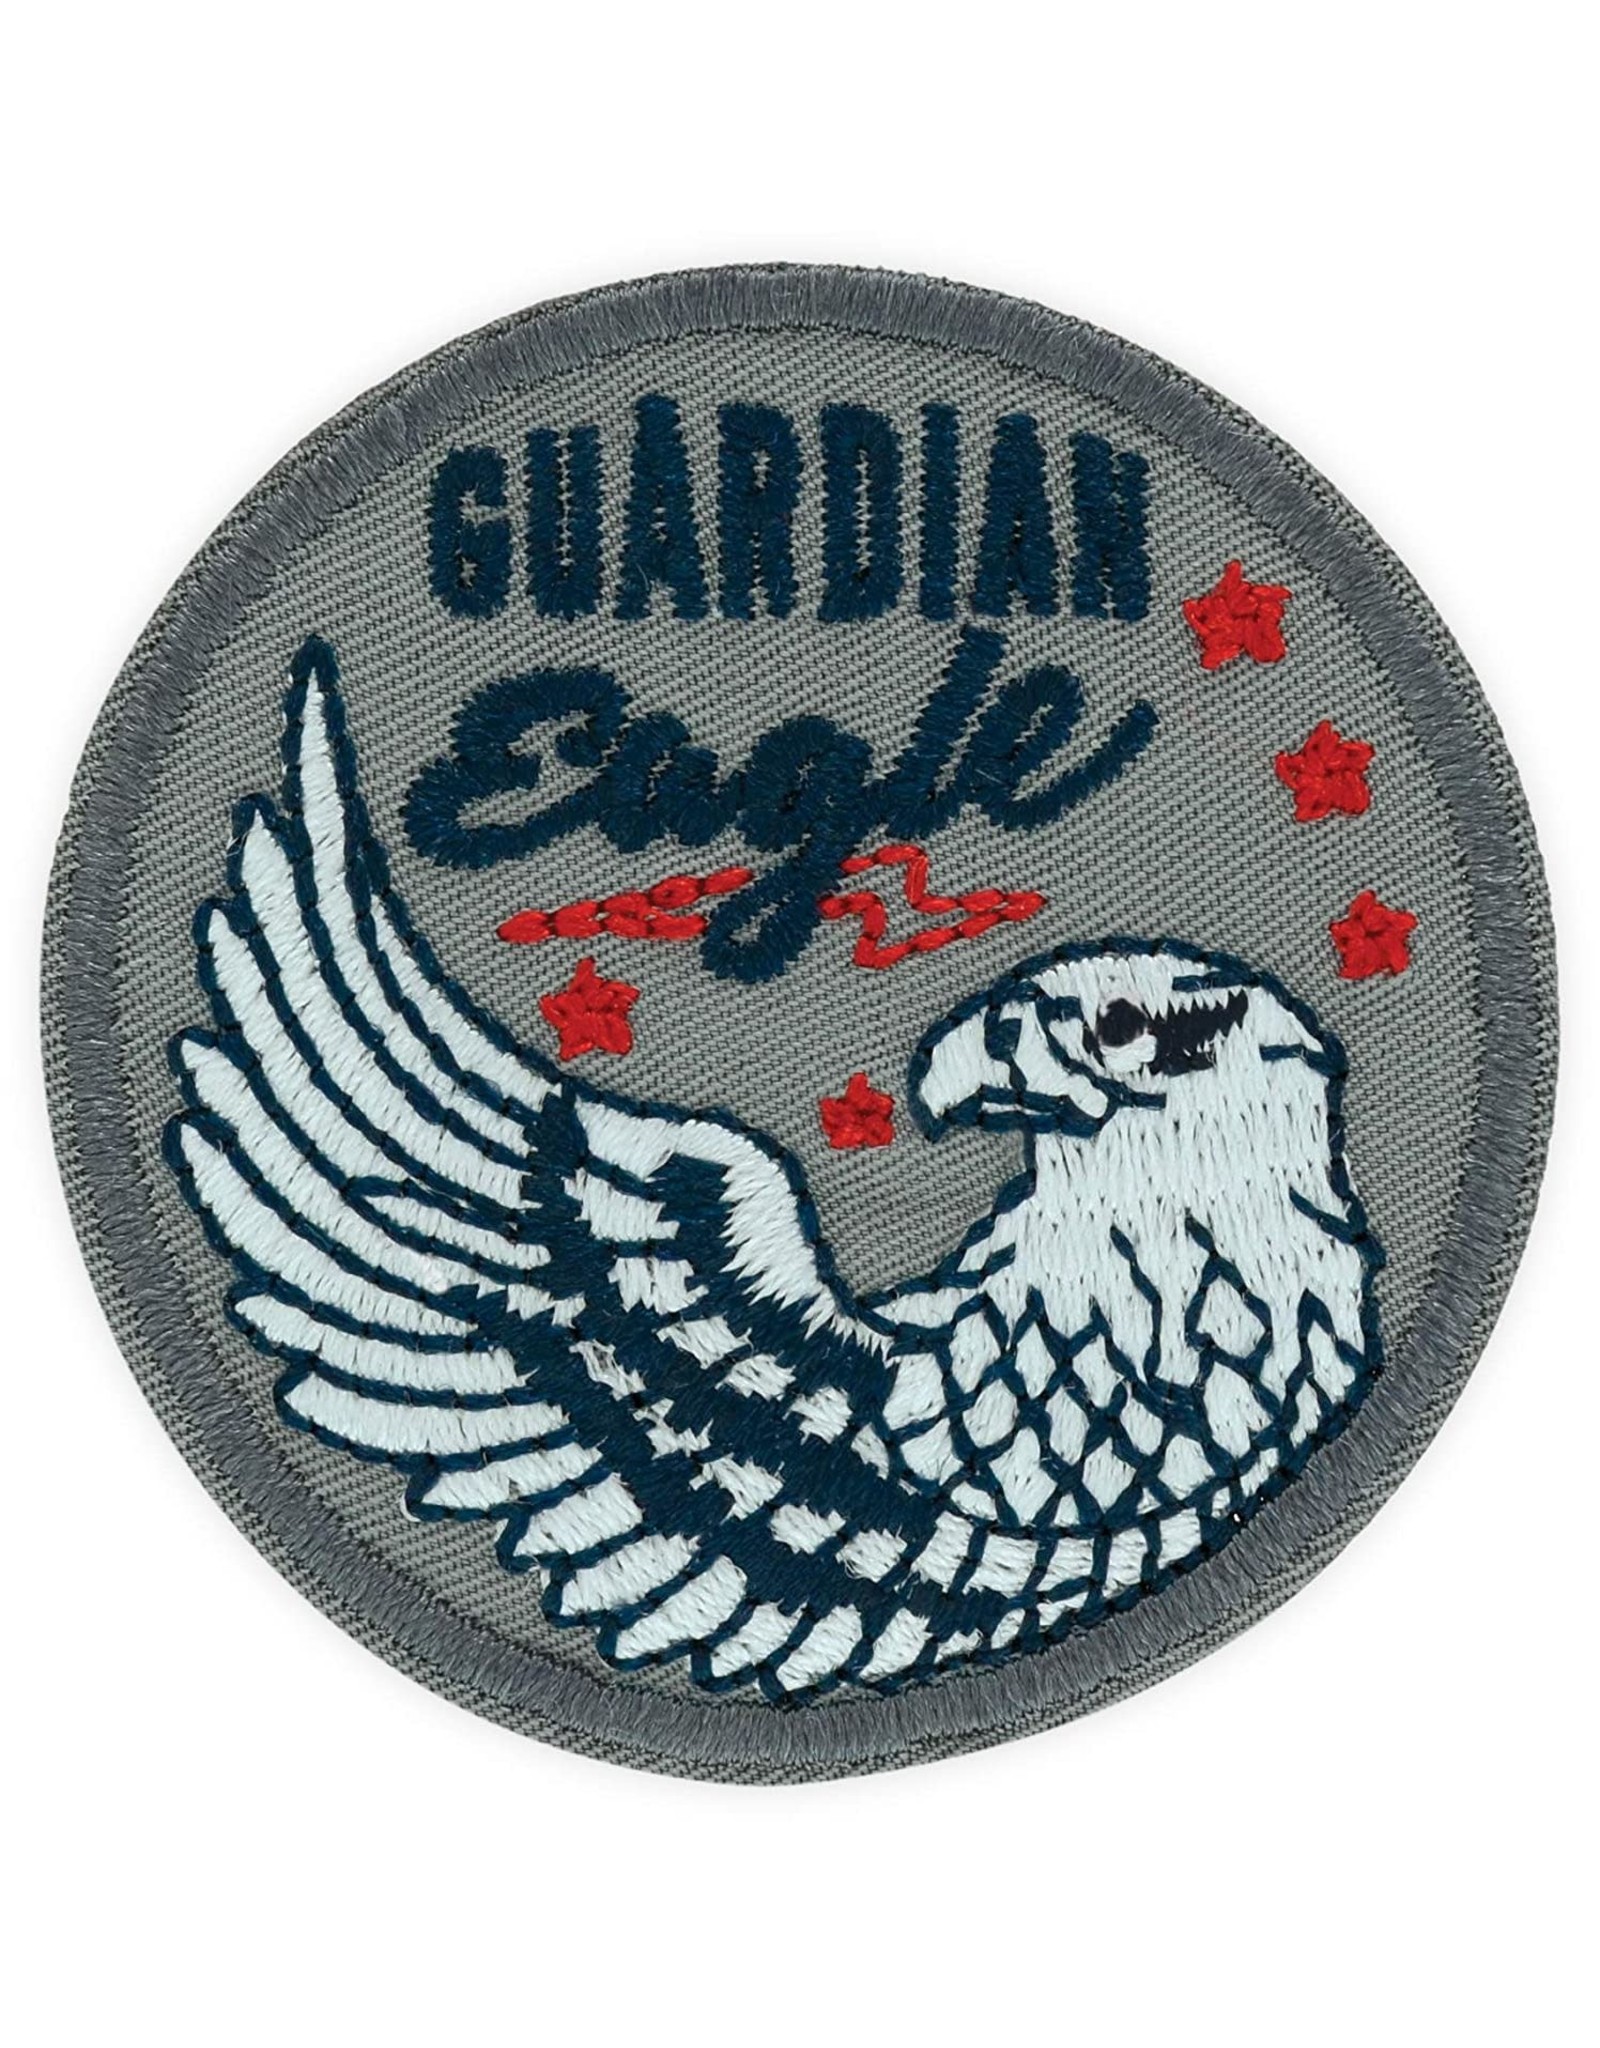 Guardian Eagle Patch - Guardian Eagle